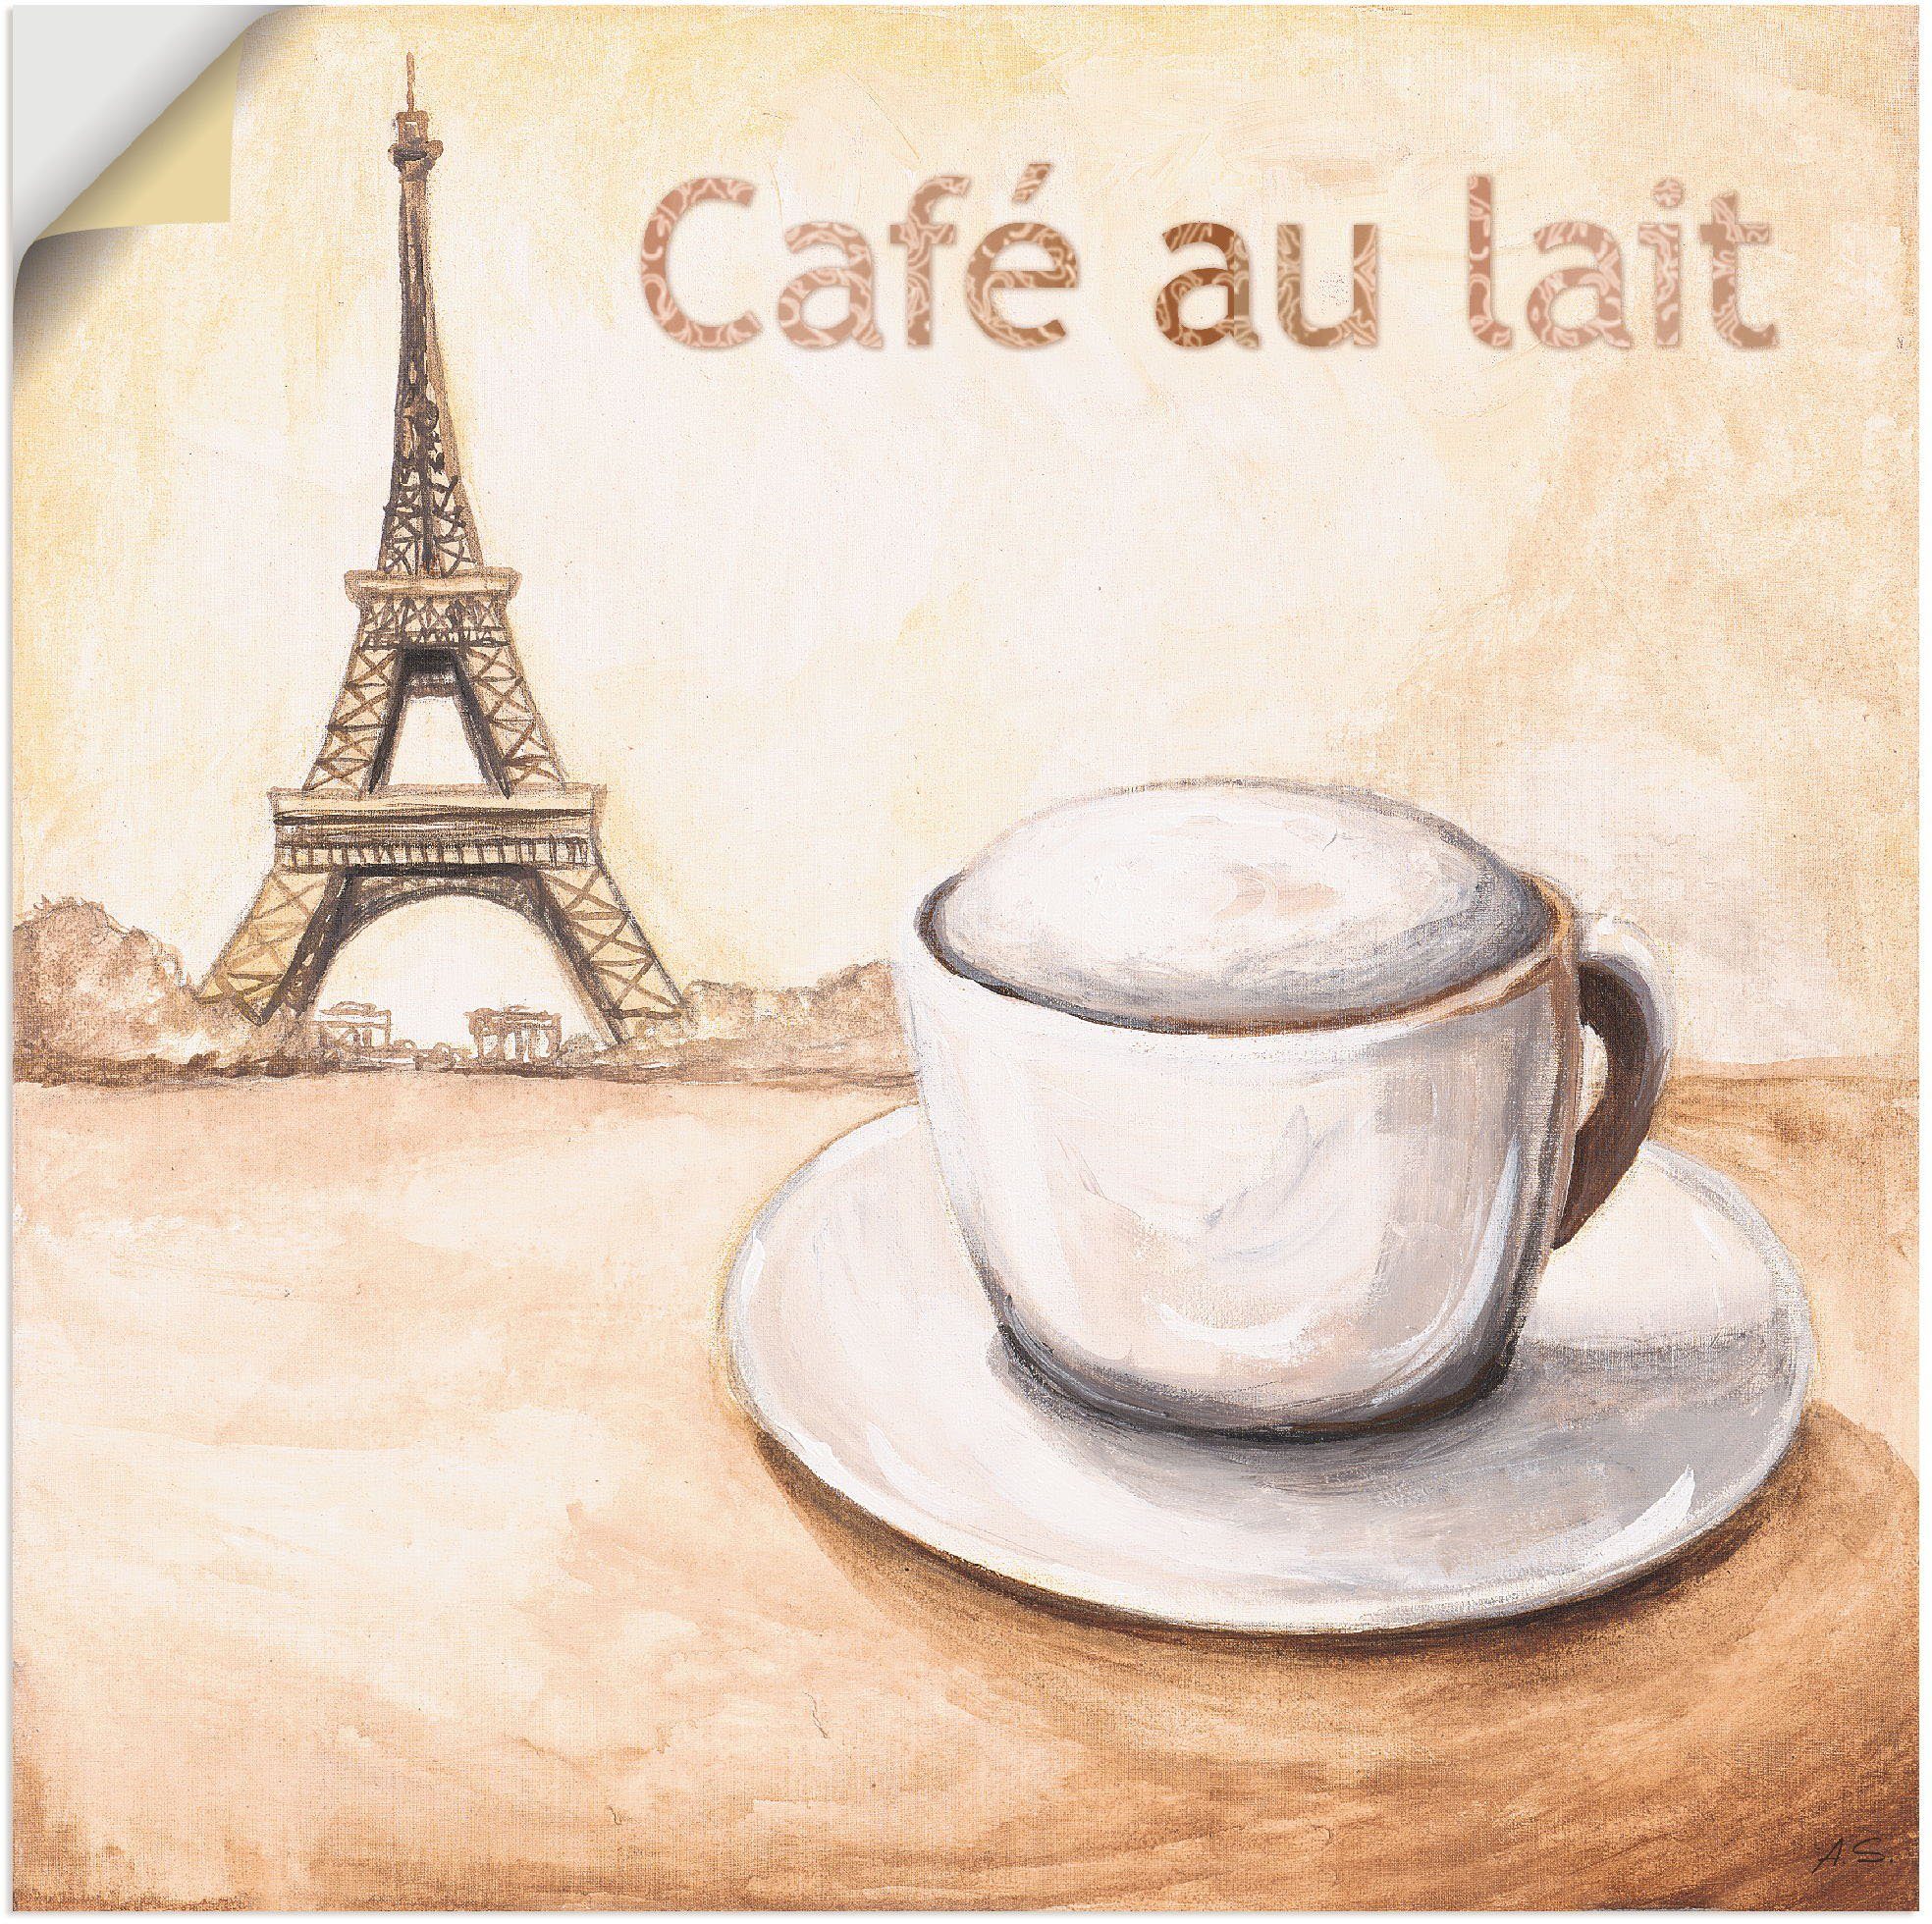 Artland Artprint Café au lait in Paris in vele afmetingen & productsoorten - artprint van aluminium / artprint voor buiten, artprint op linnen, poster, muursticker / wandfolie ook